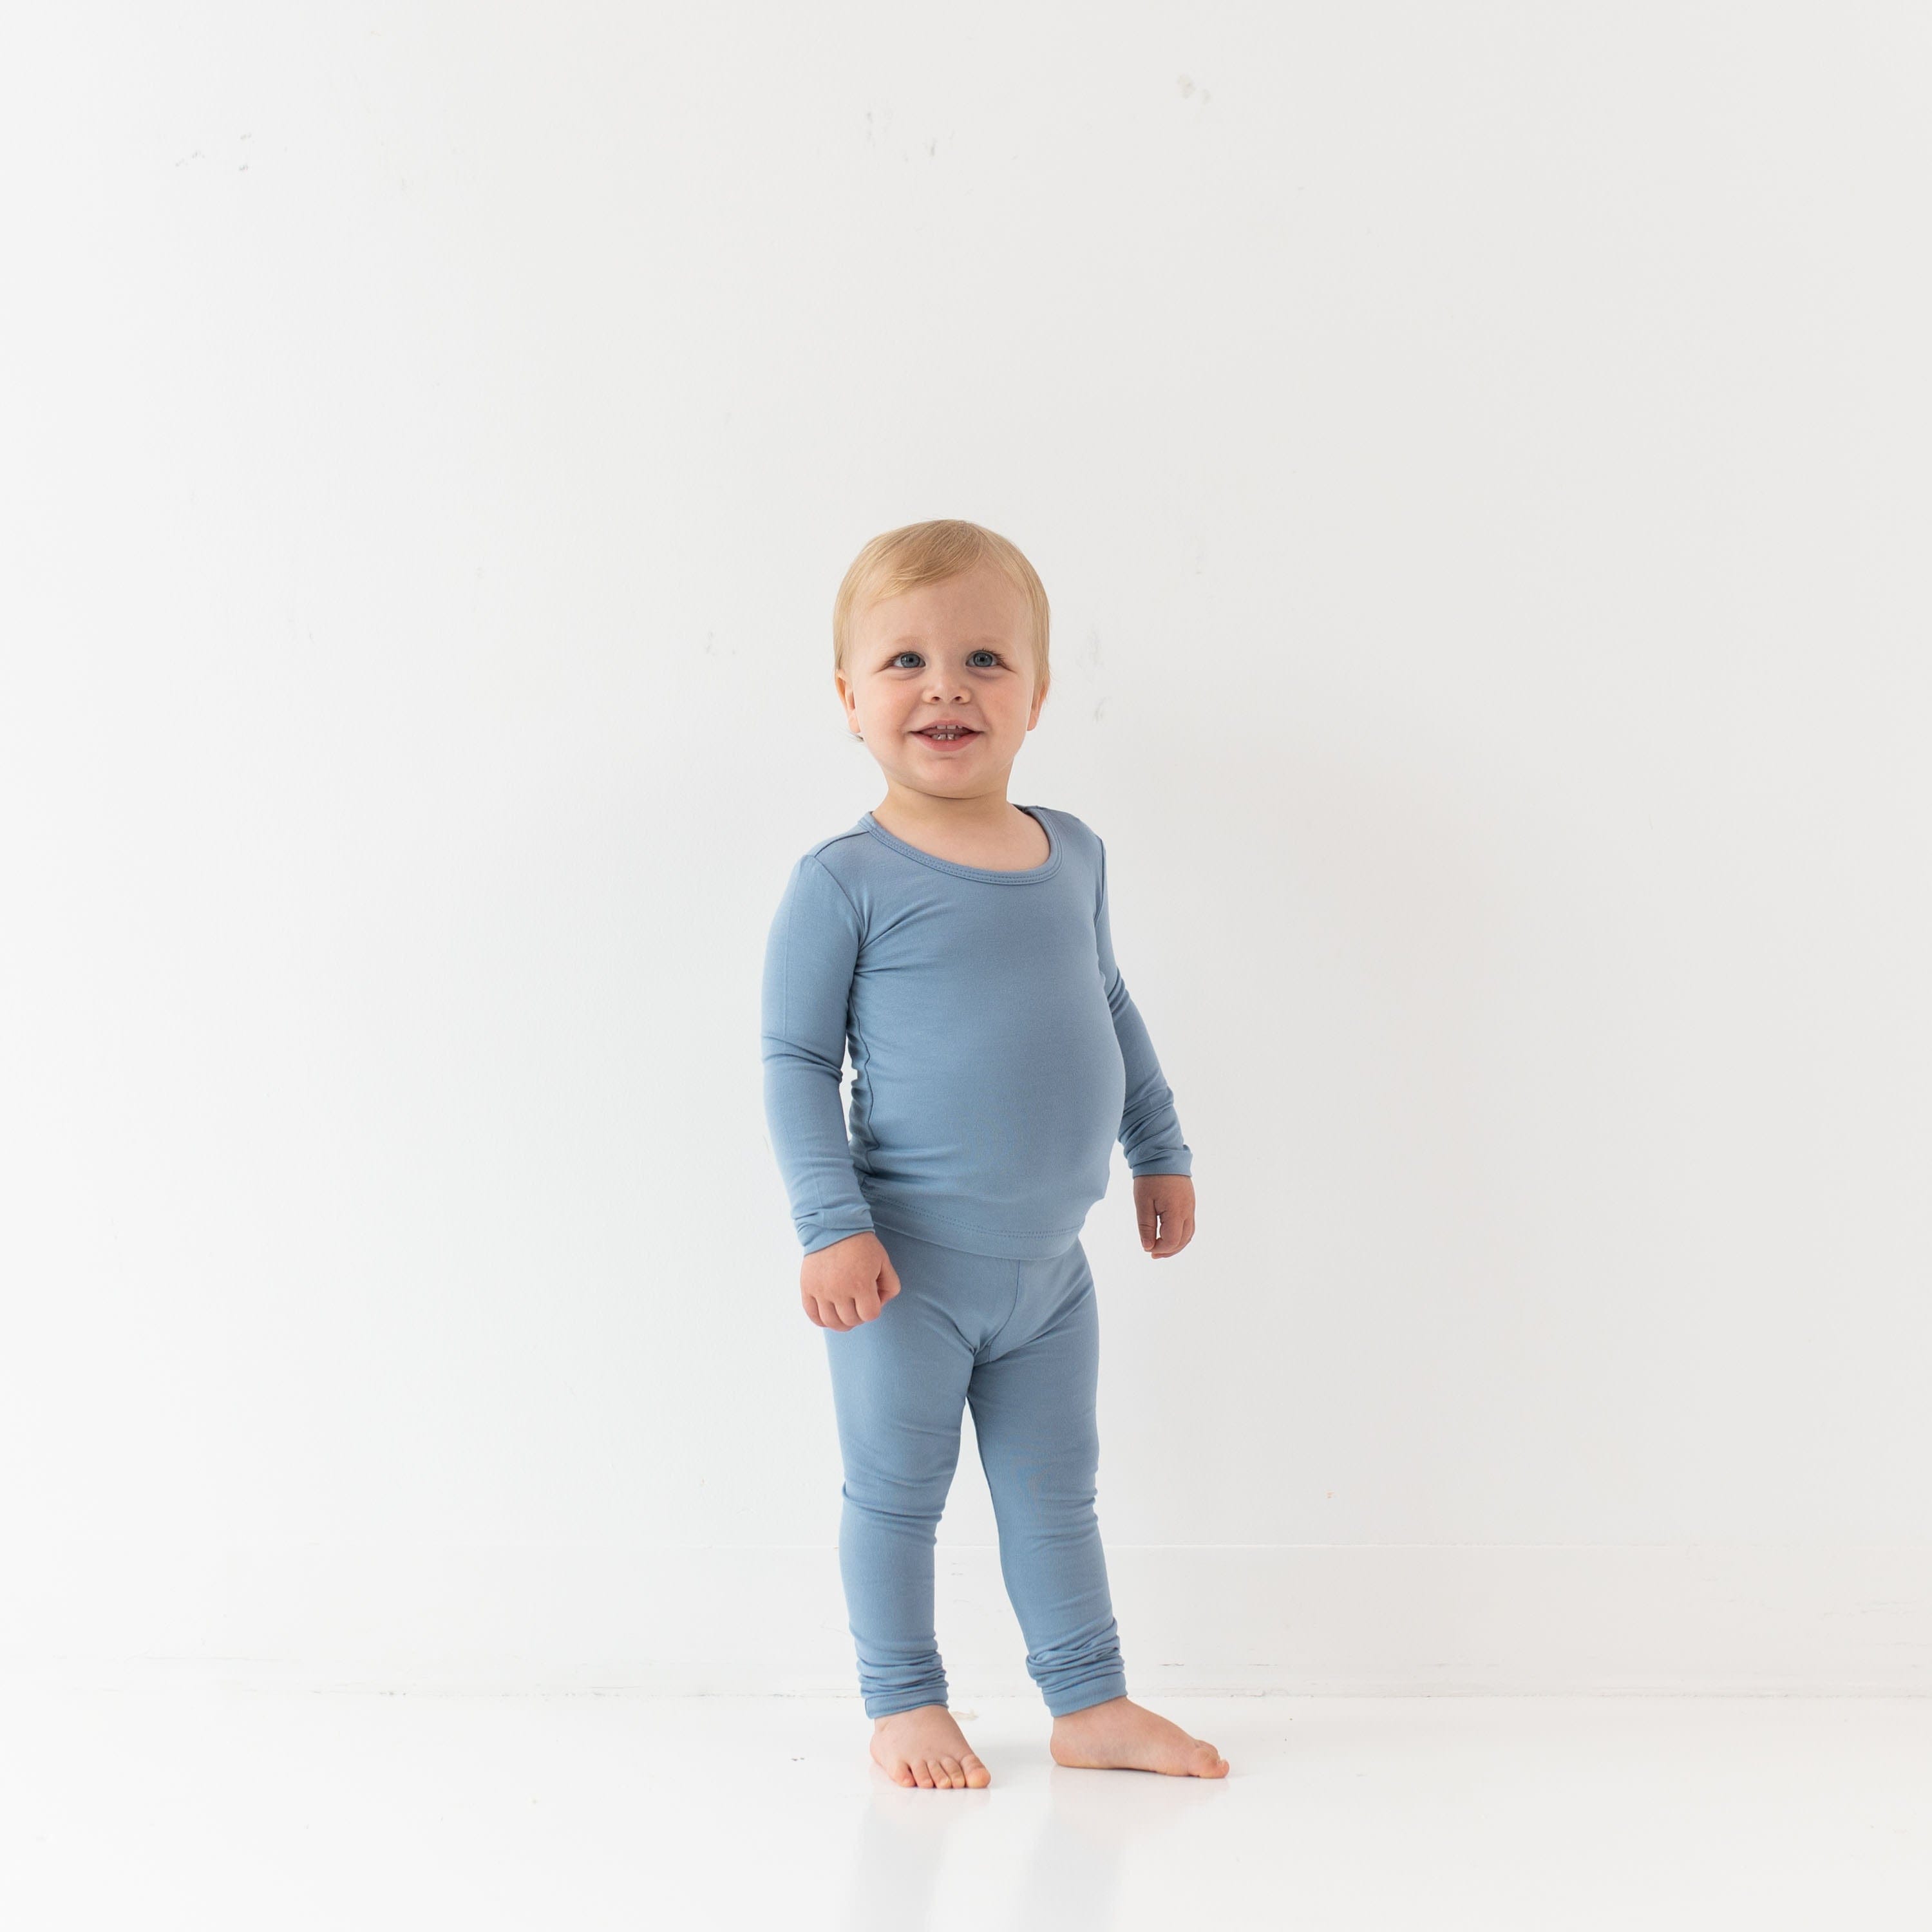 Toddler wearing Kyte Baby Long Sleeve Pajamas in Slate